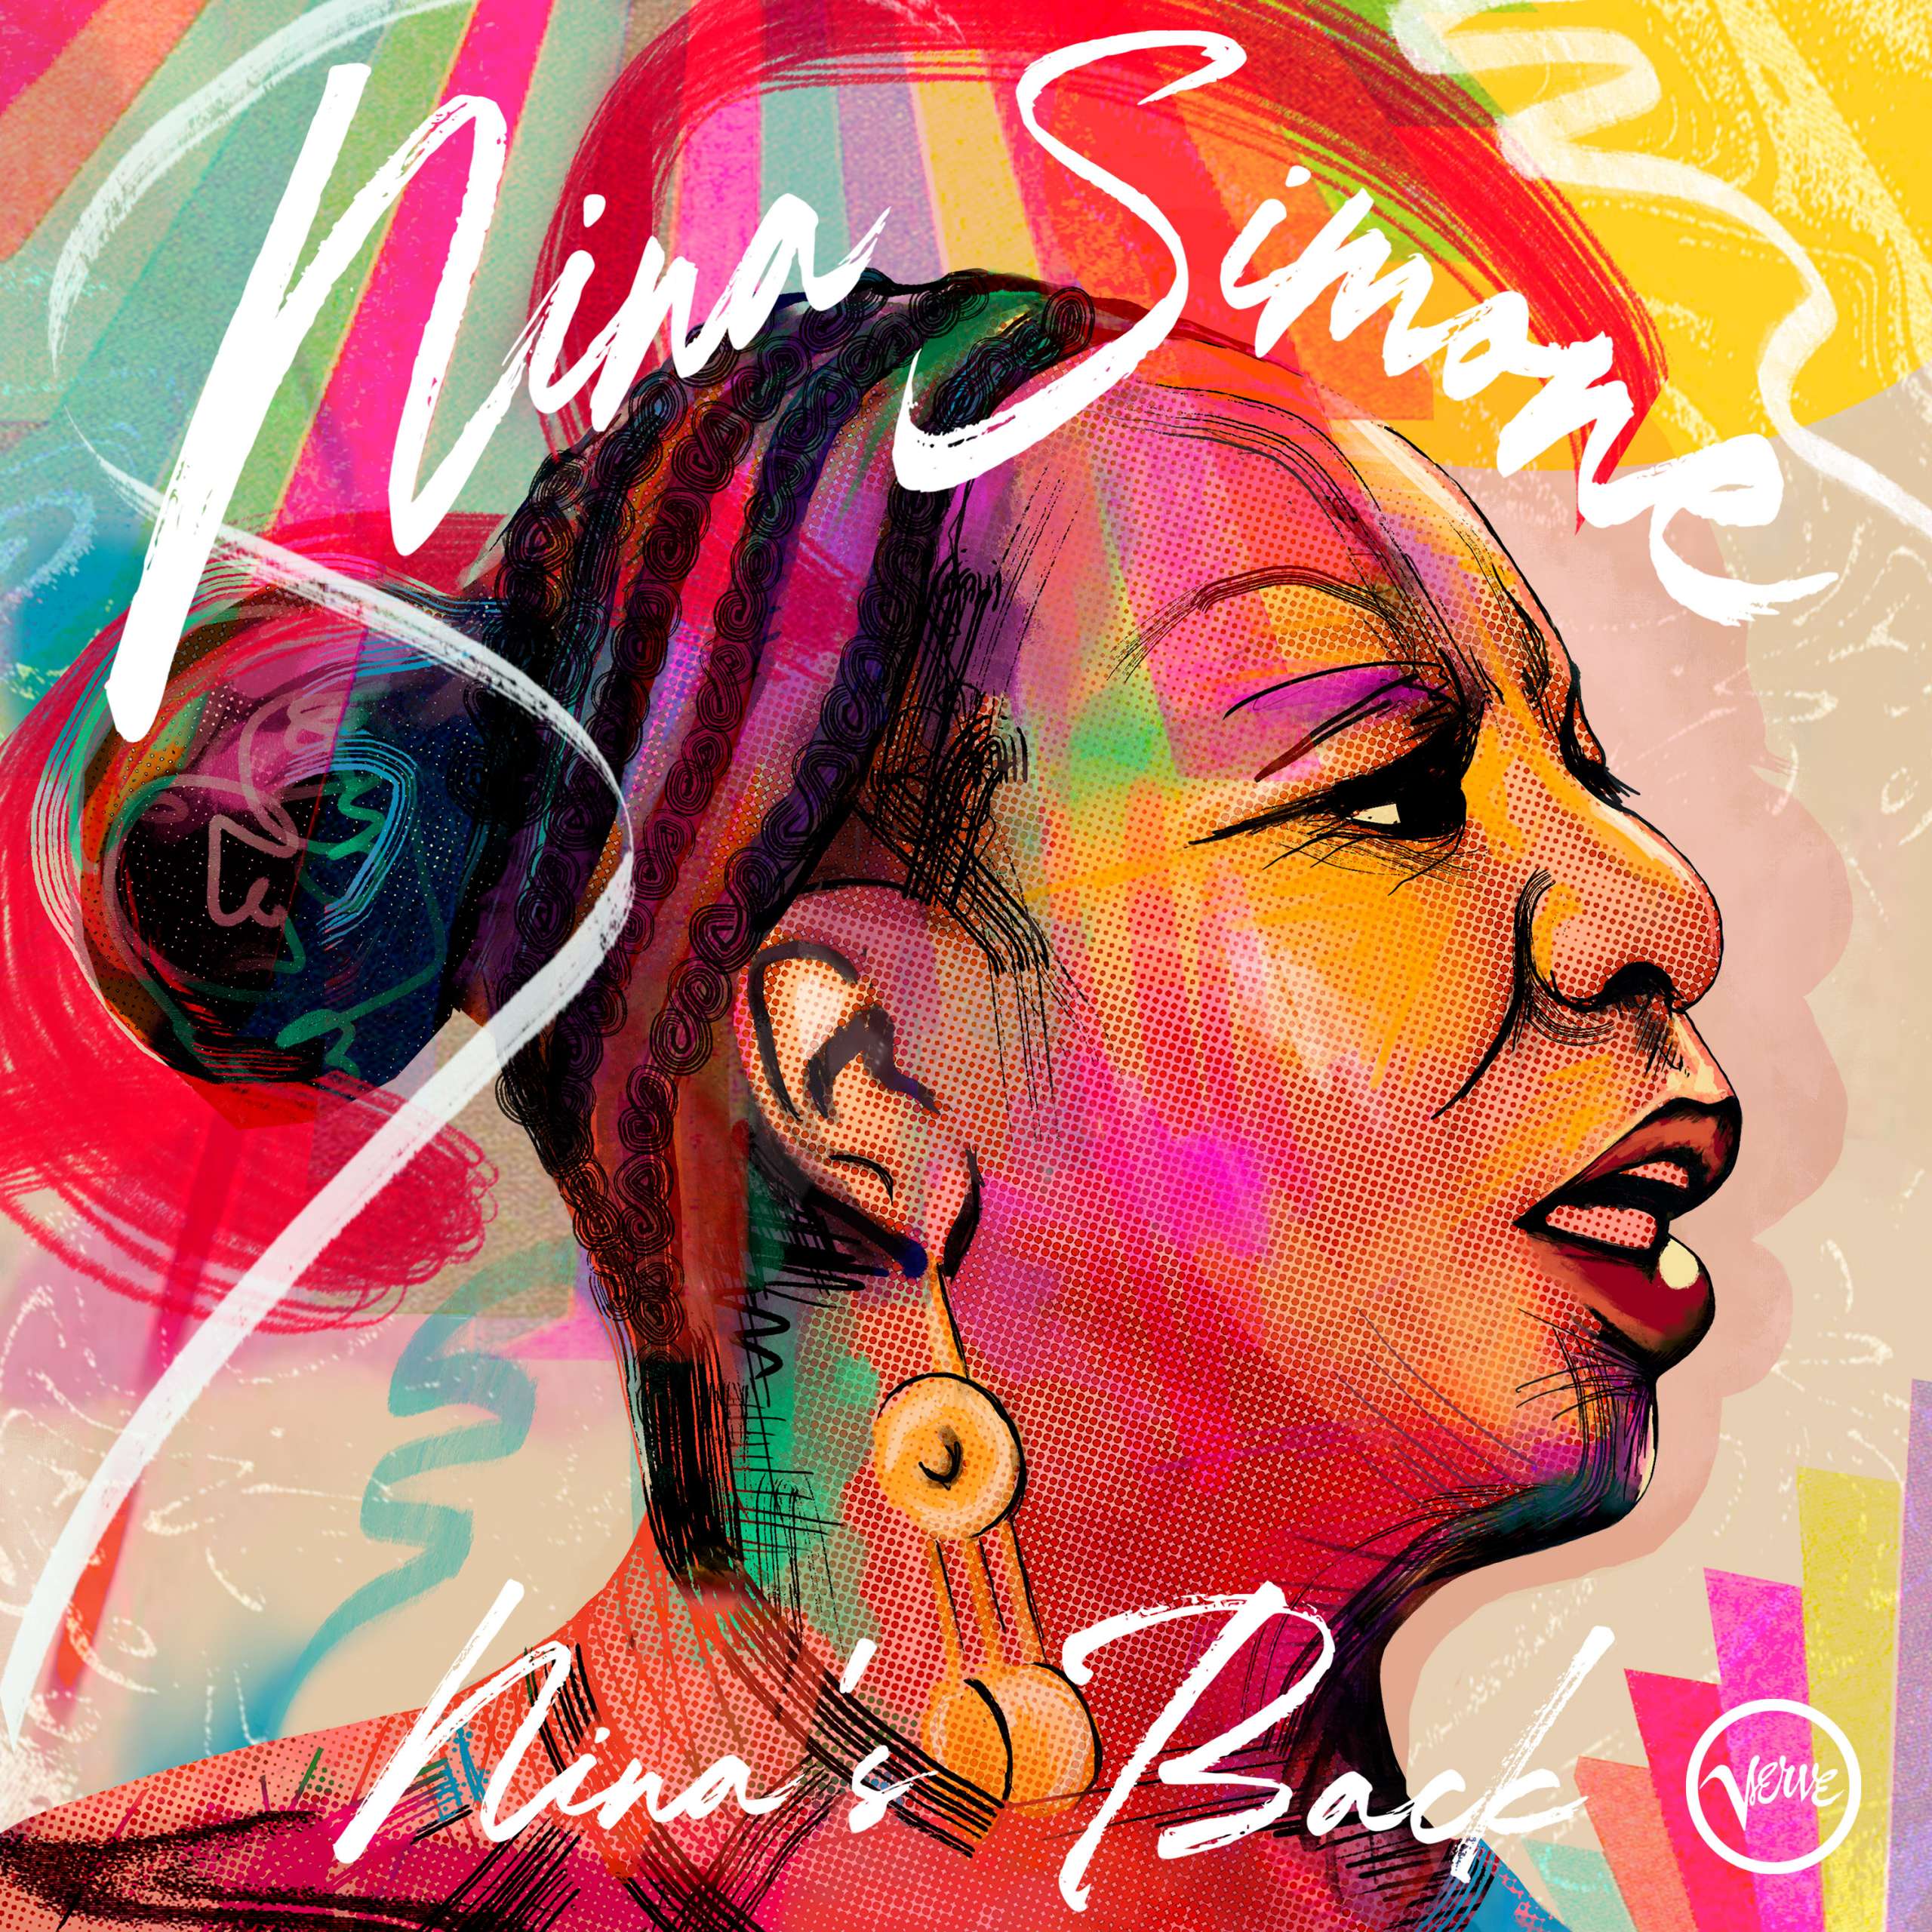 NINA SIMONE’S ALBUM "NINA’S BACK" OUT MARCH 15